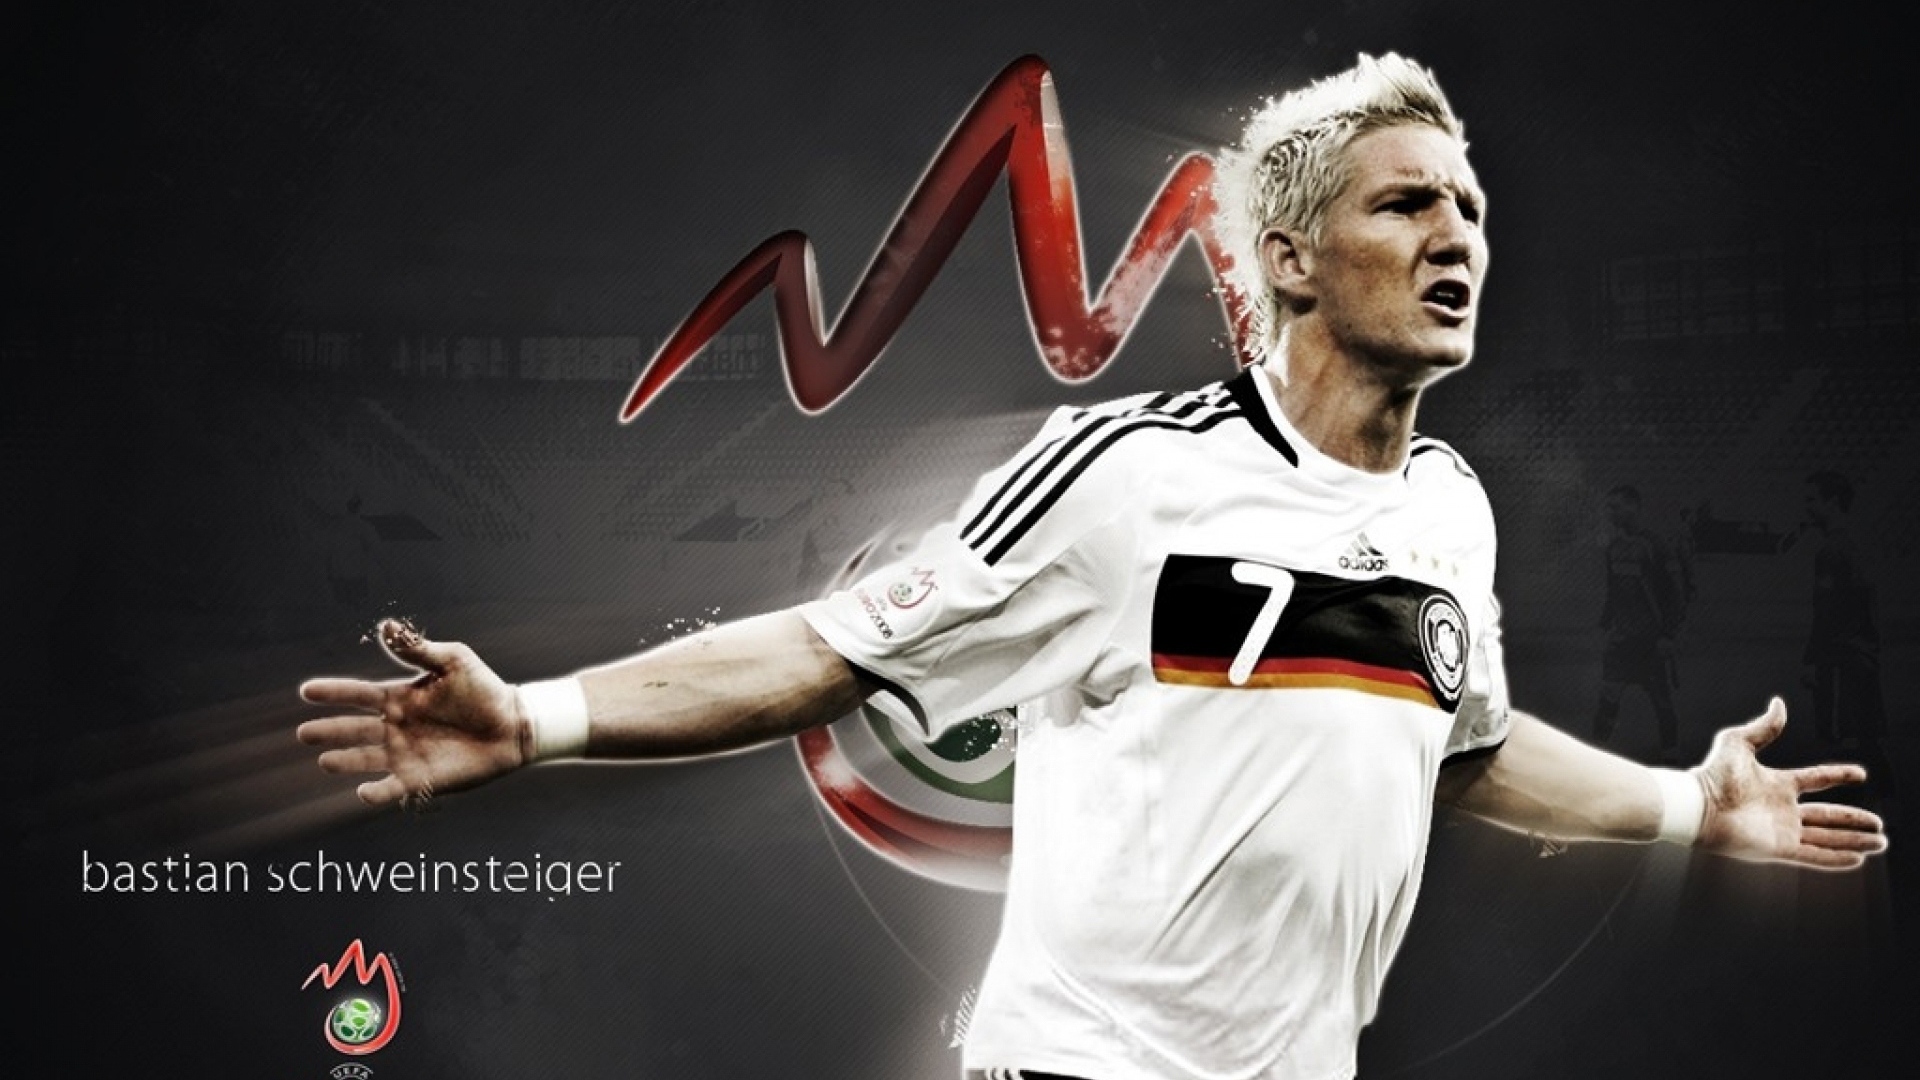 The best player of Bayern Bastian Schweinsteiger 